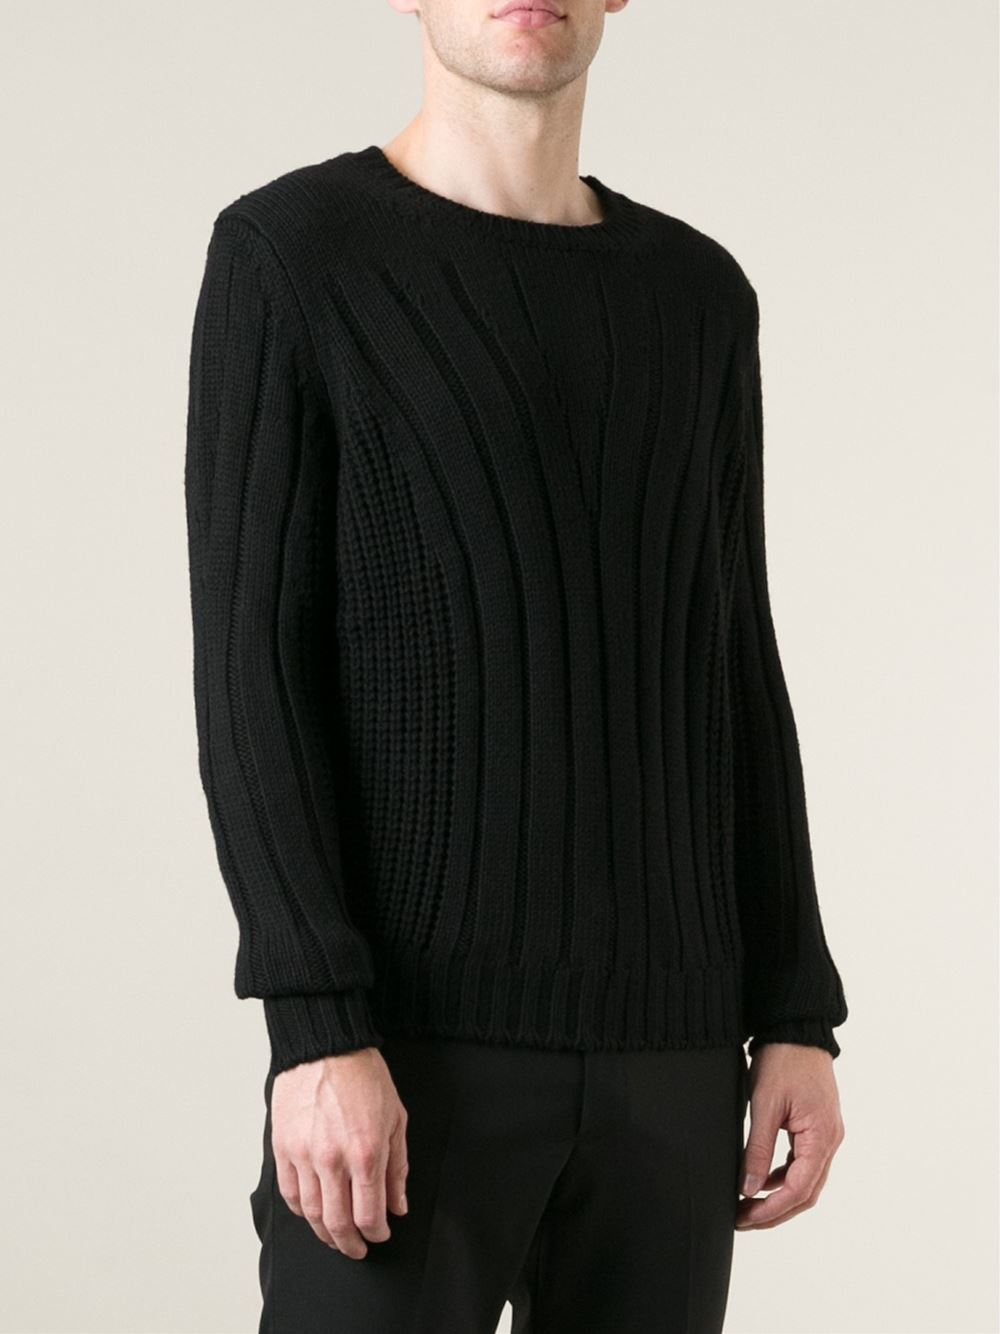 Fendi Ribbed Knit Sweater in Black for Men - Lyst